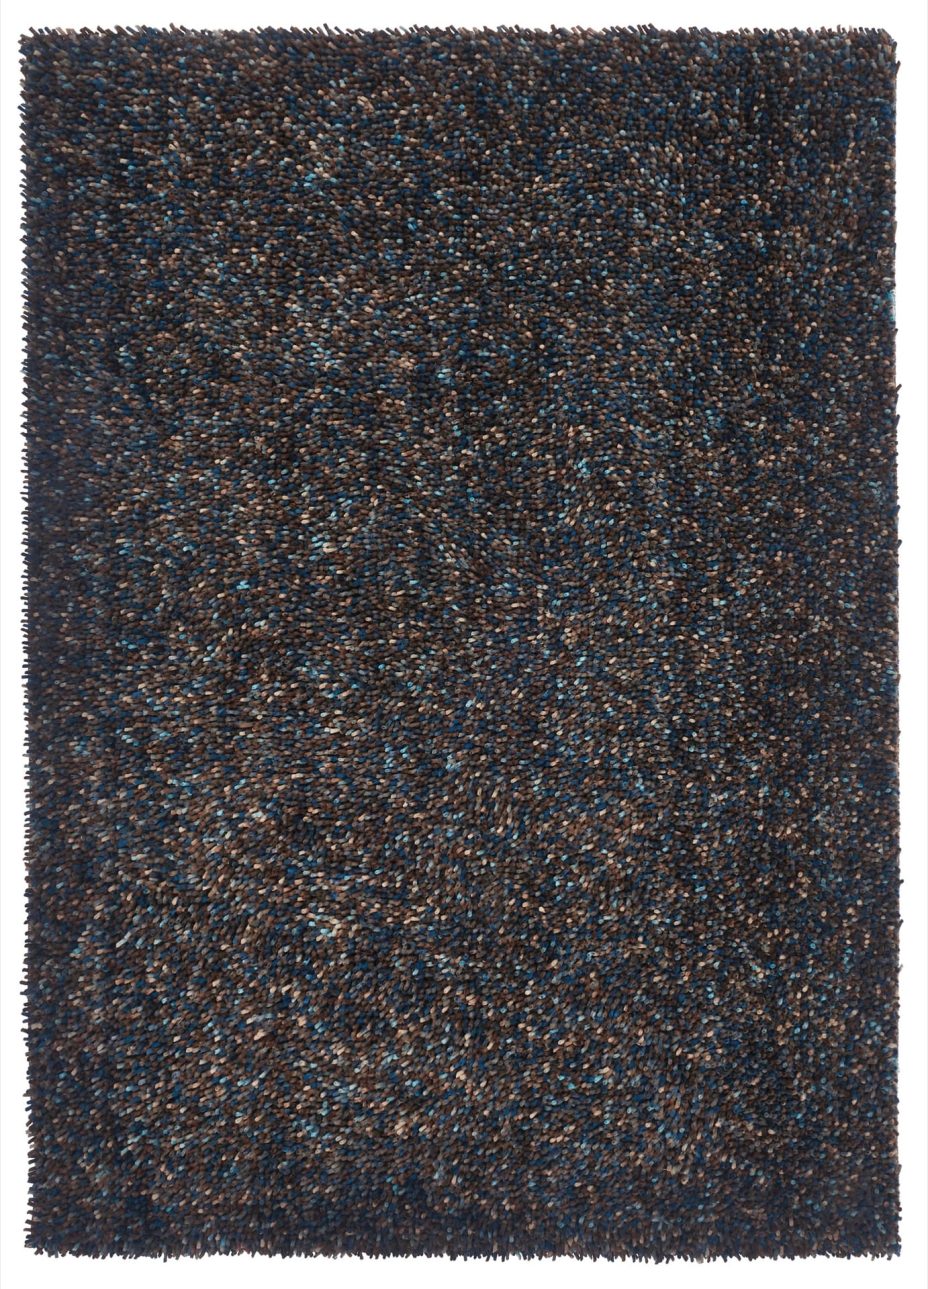 Dots 170515 rug by Brink